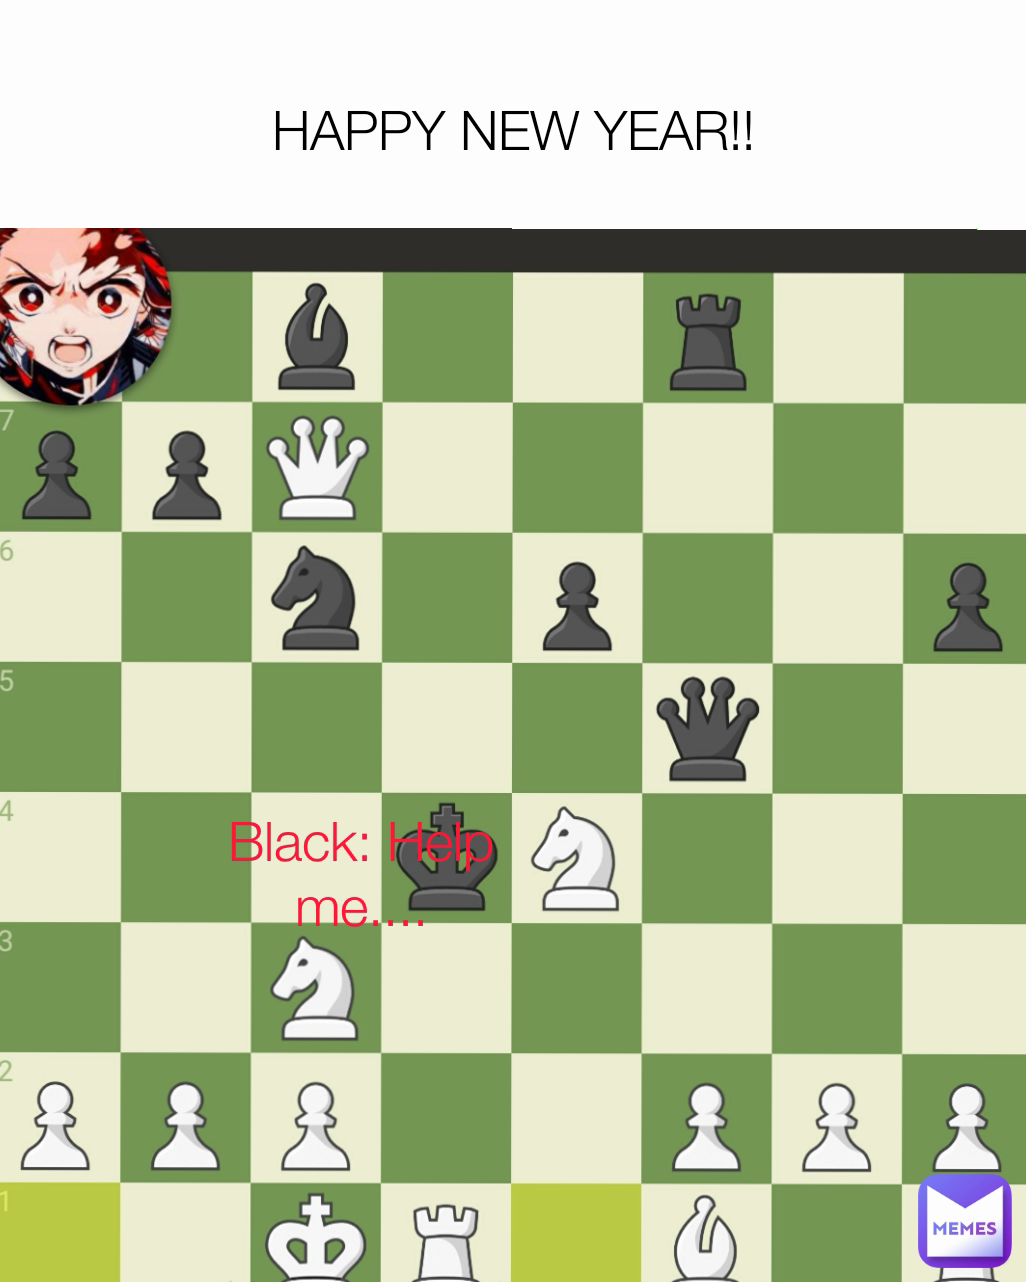 Black: Help me.... HAPPY NEW YEAR!!